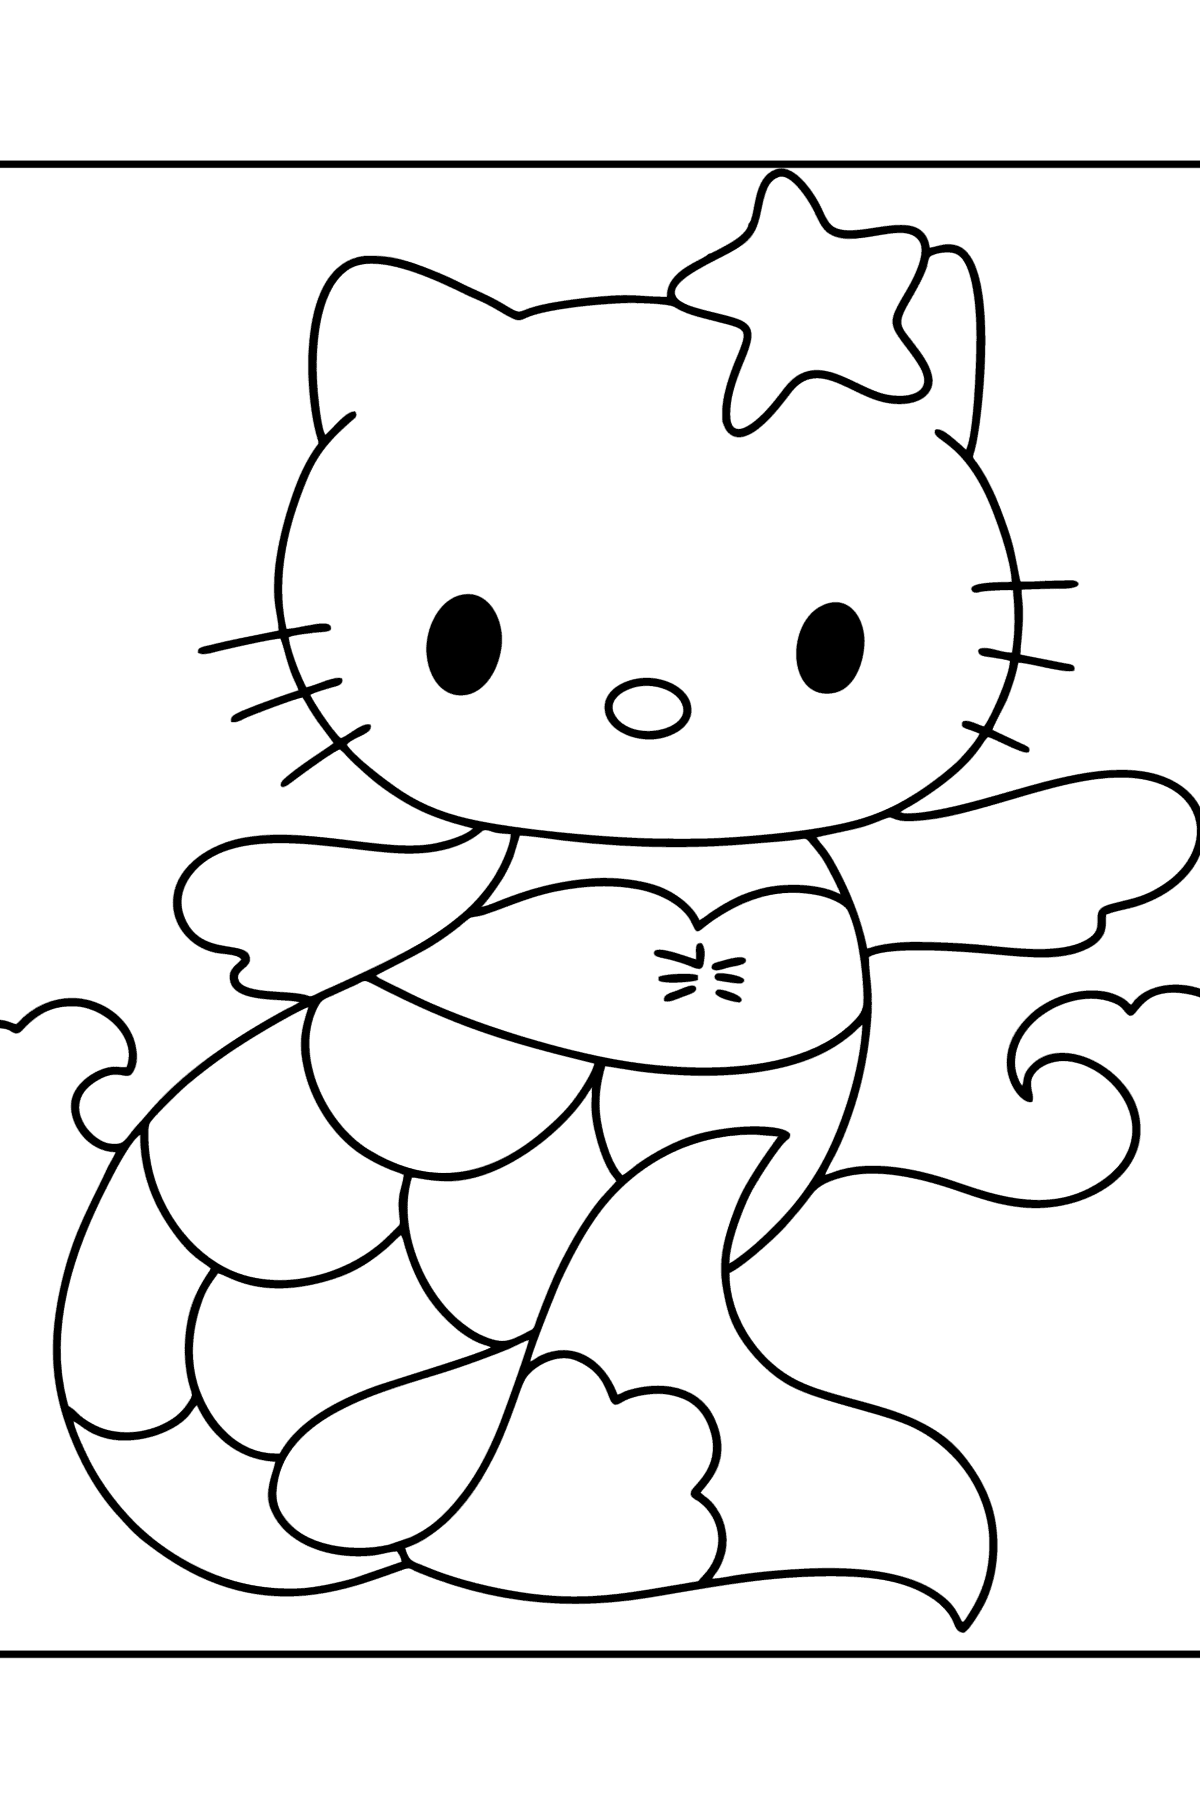 Dibujo de Sirena de Hello Kitty para colorear - Dibujos para Colorear para Niños